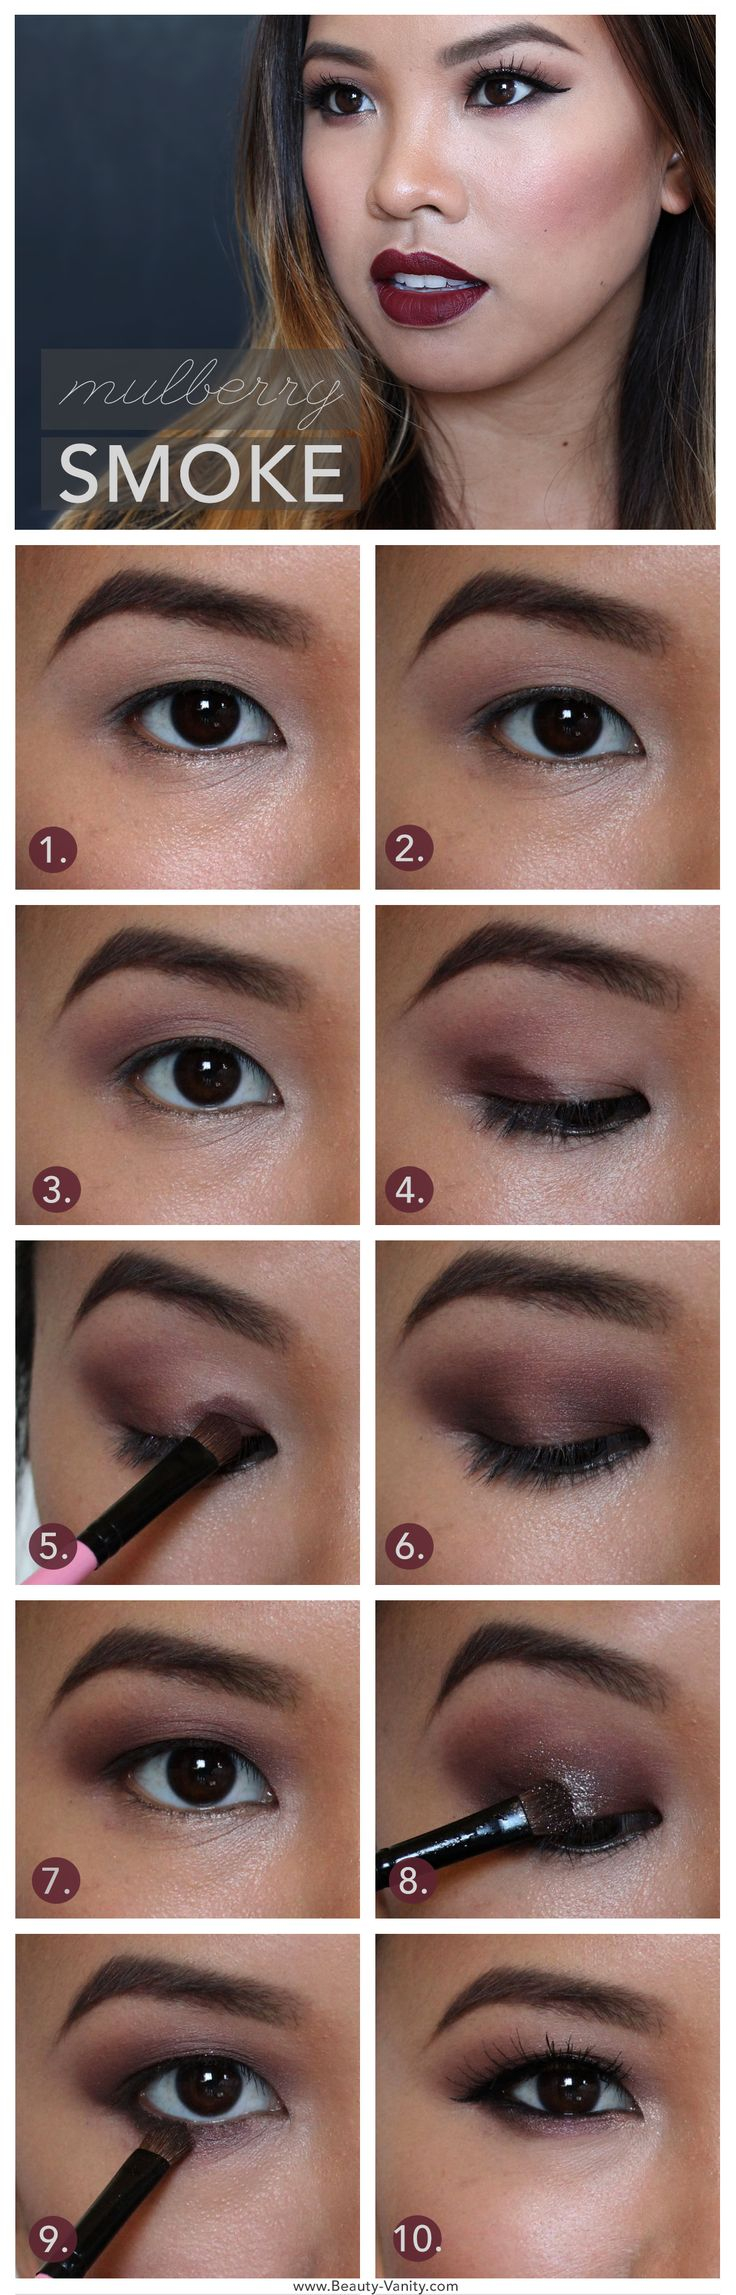 Epic Eye Makeup 15 Eye Makeup Hacks For Women With Bad Makeup Skills Women Daily